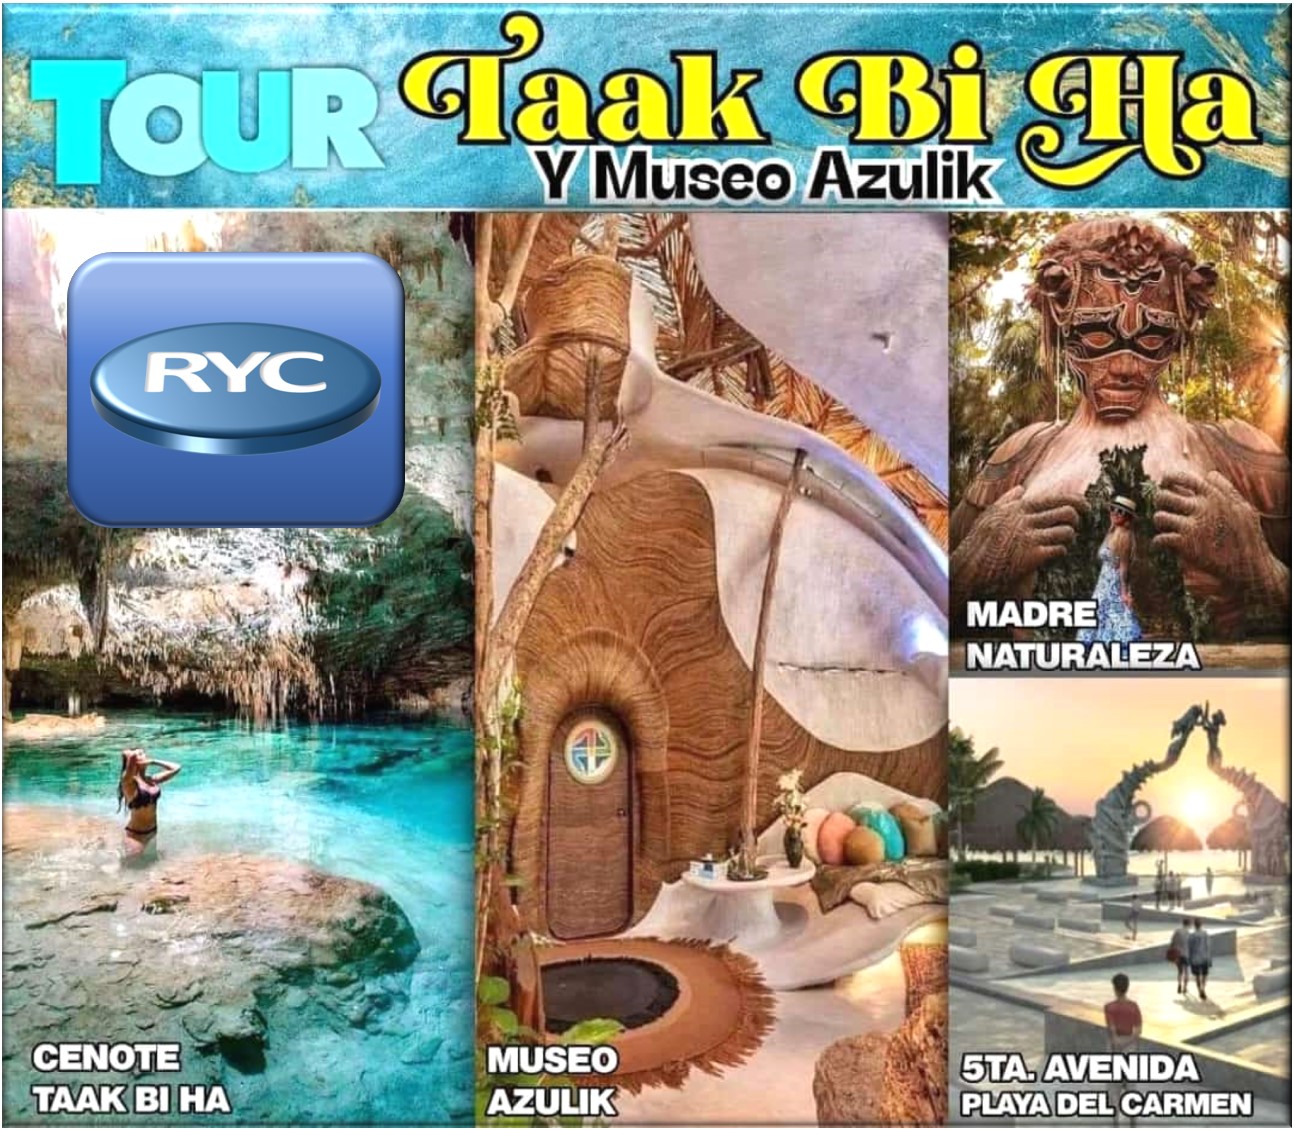 Tour Taak Bi Ha y Museo Azulik